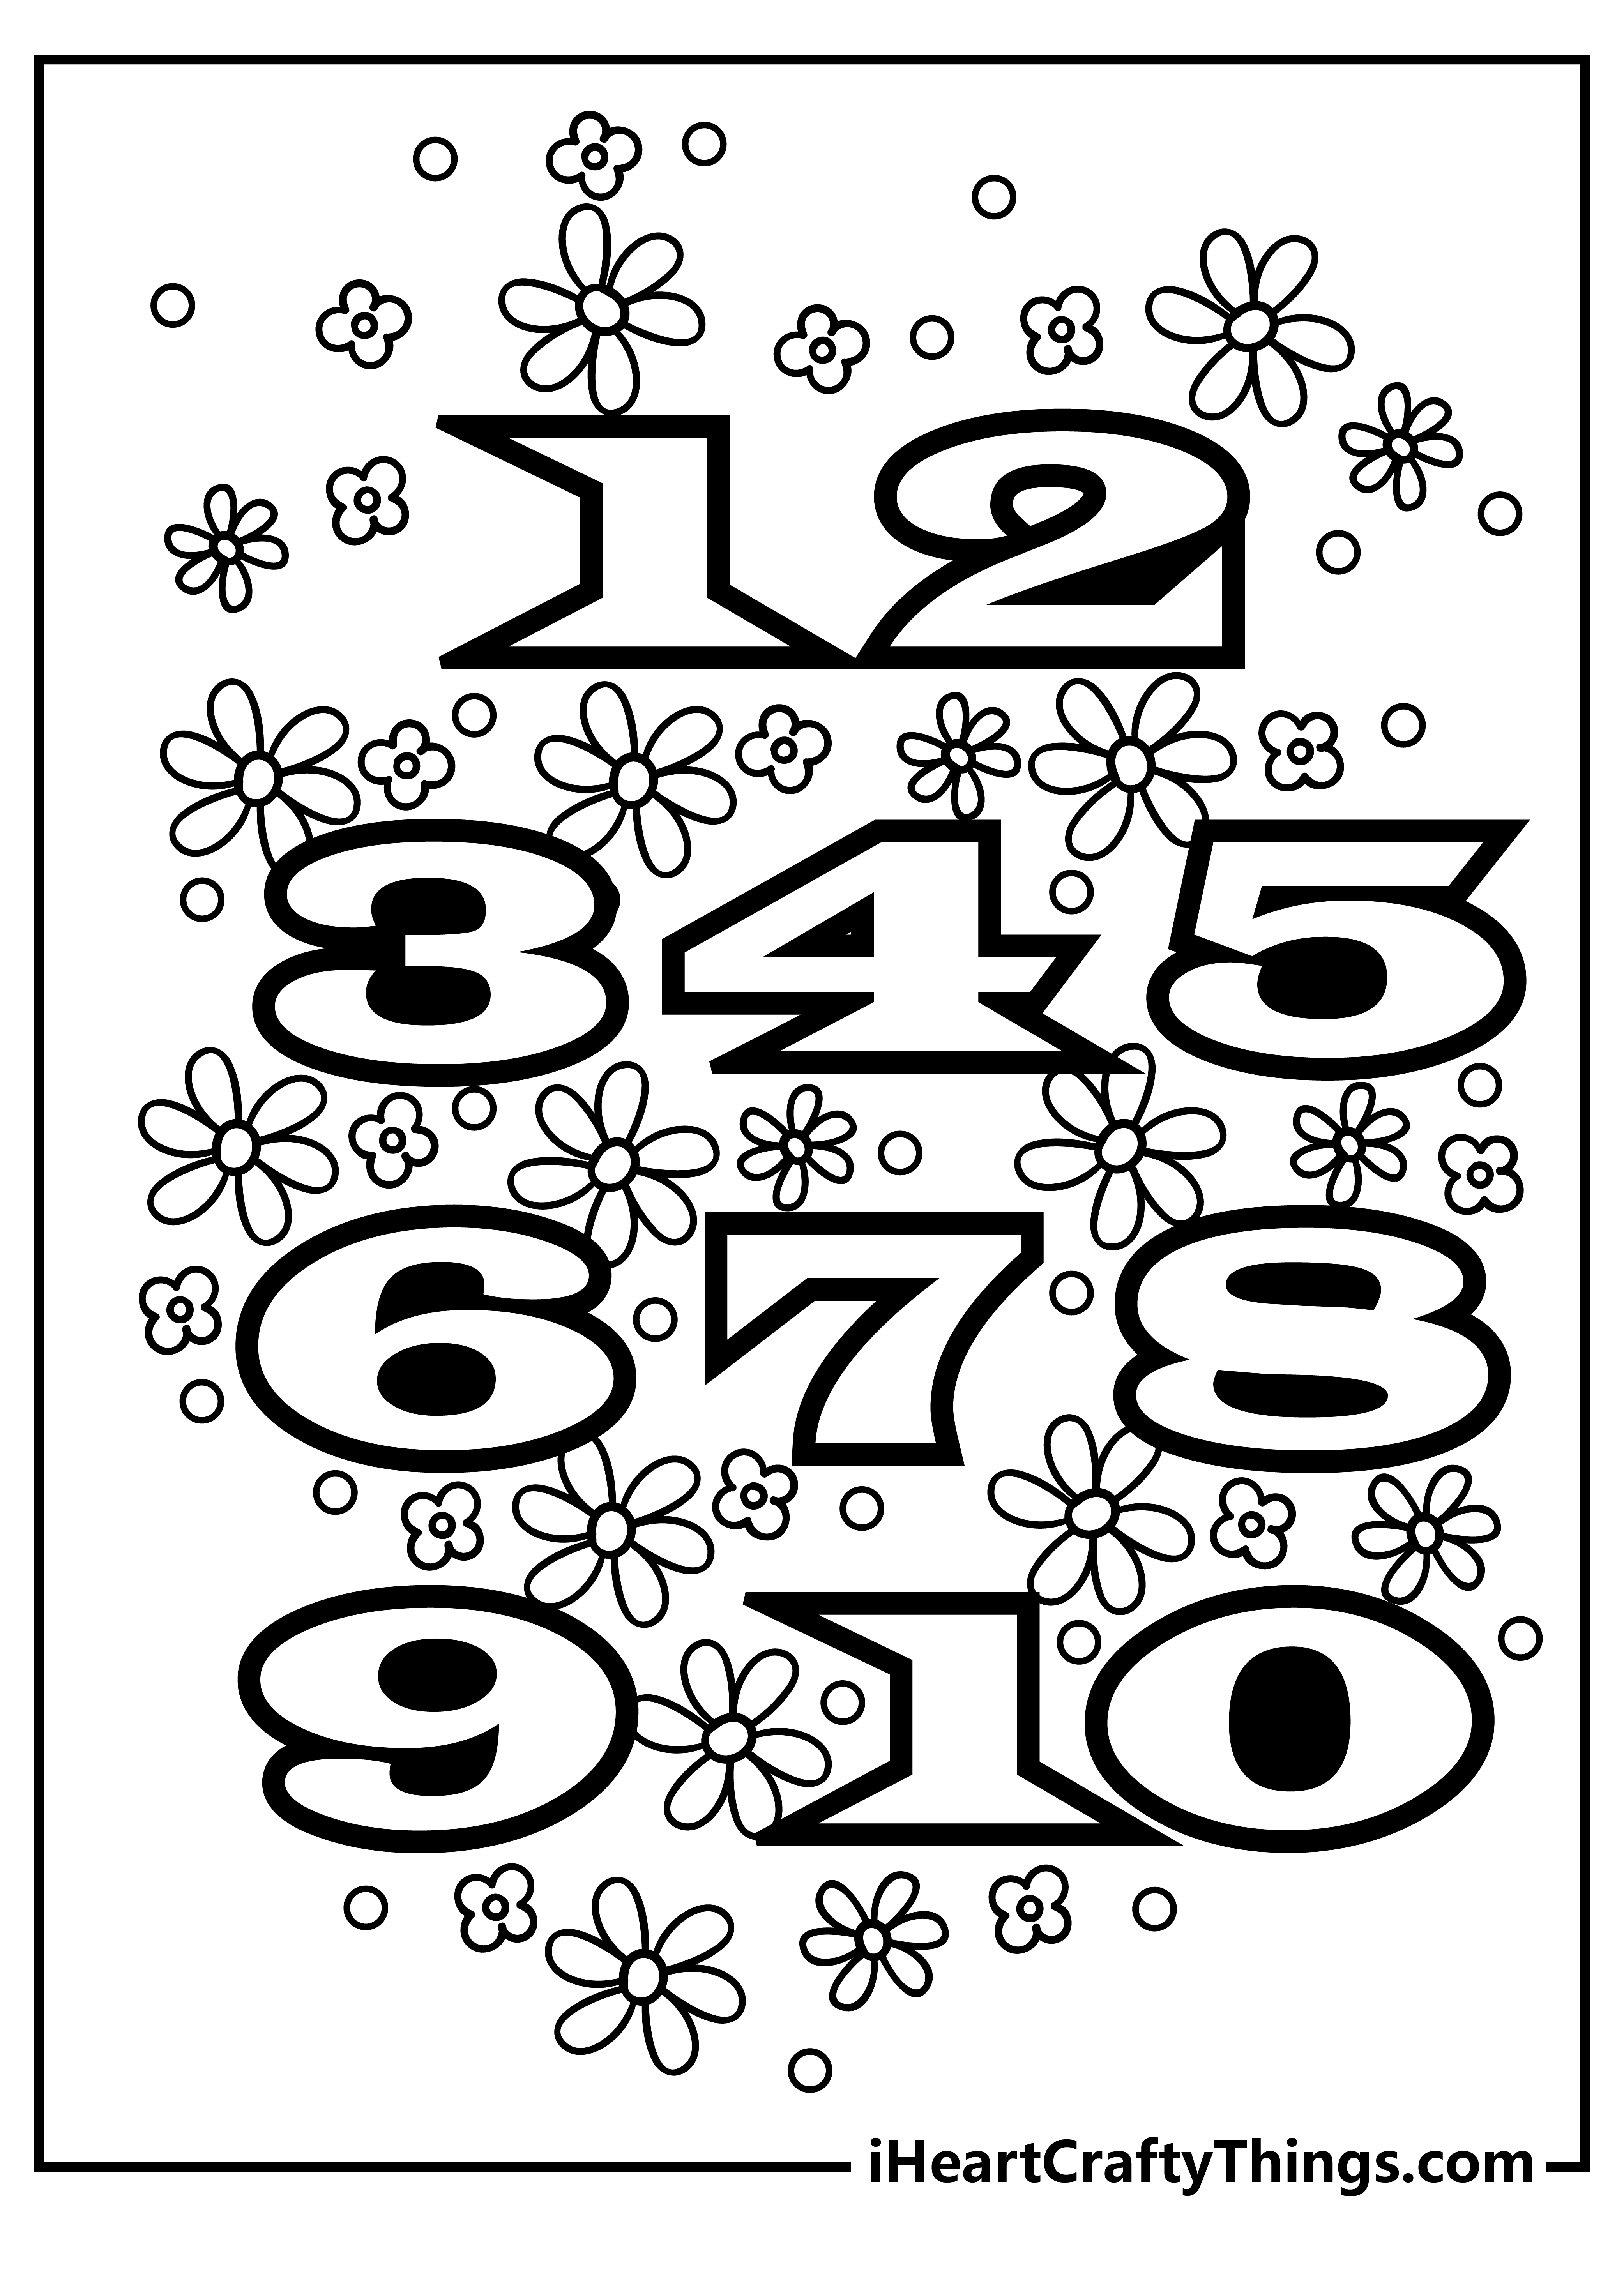 Number Coloring Original Sheet for children free download